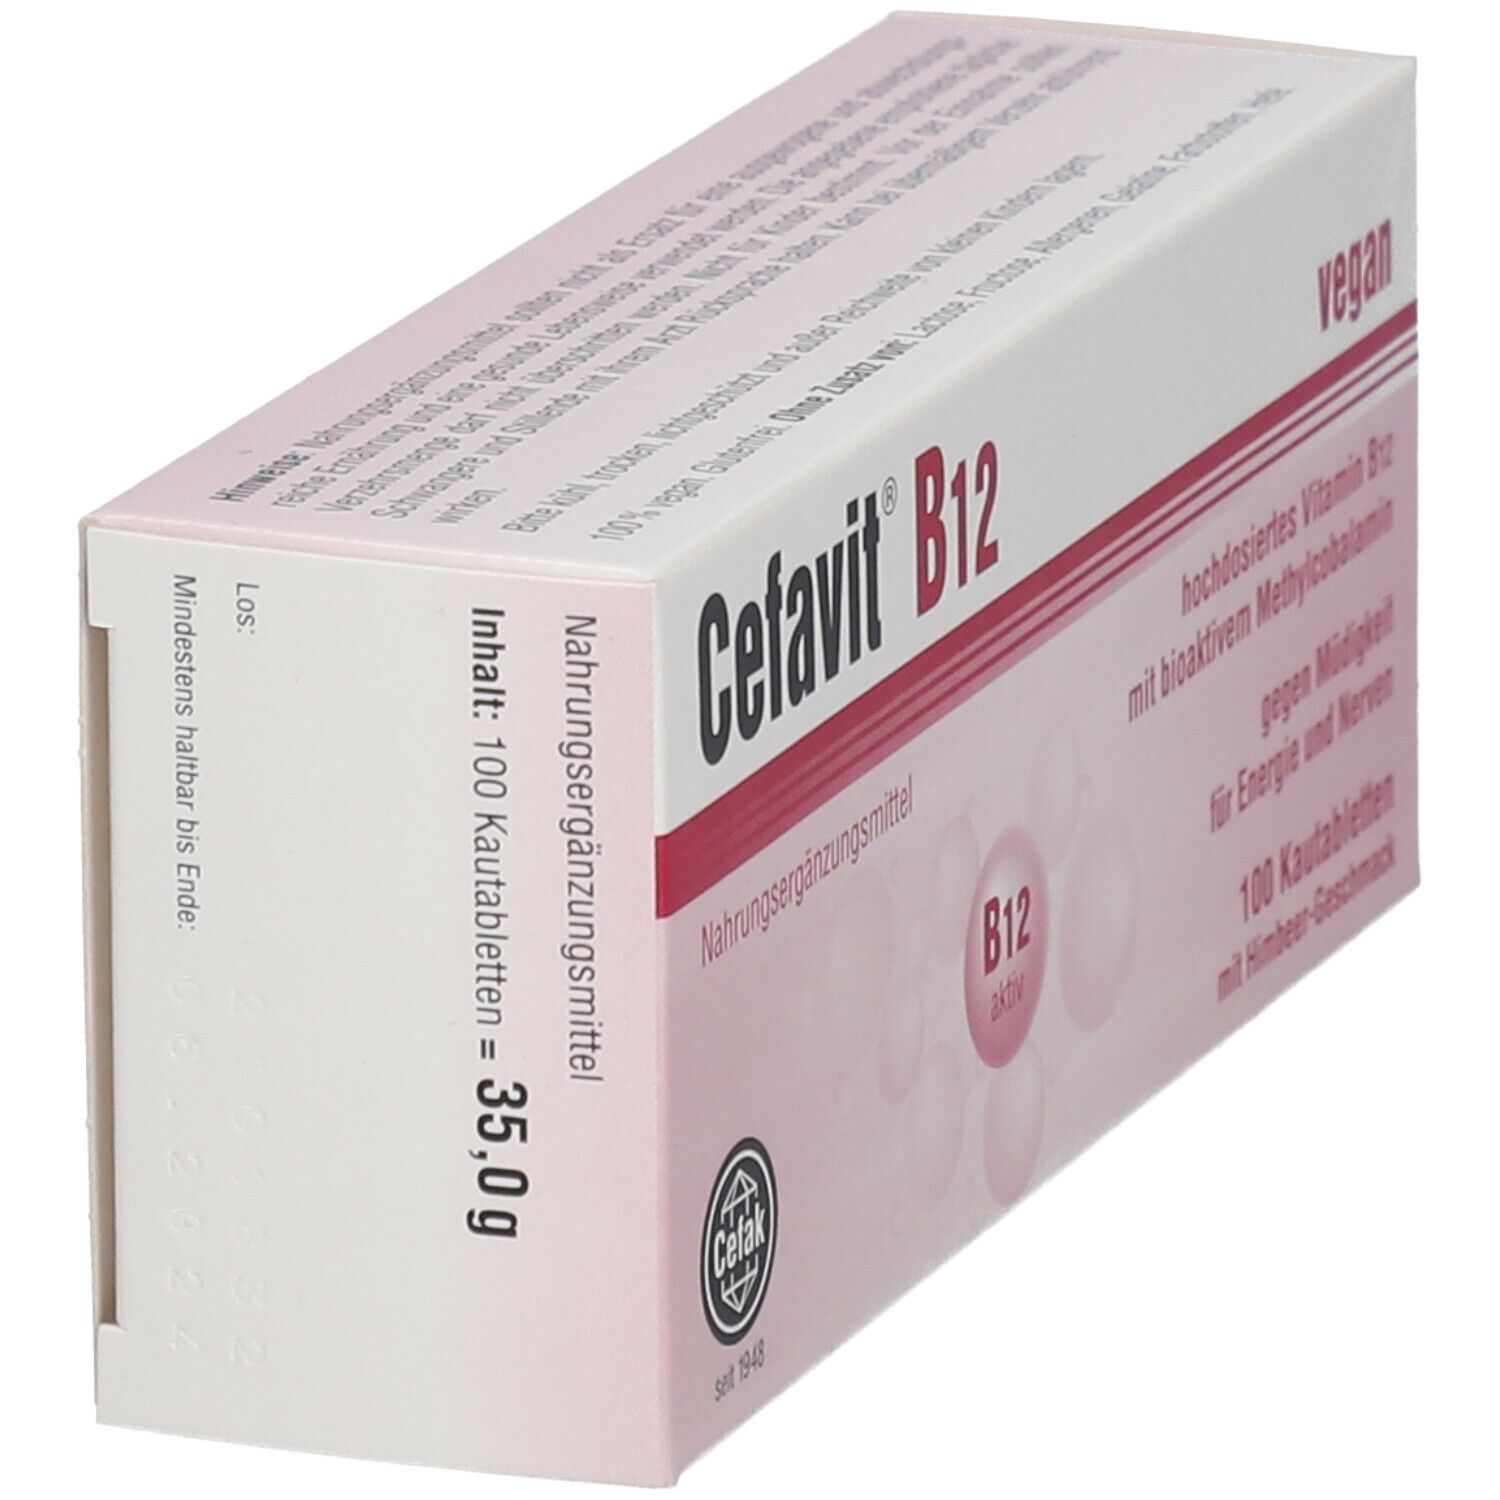 Cefavit® B12